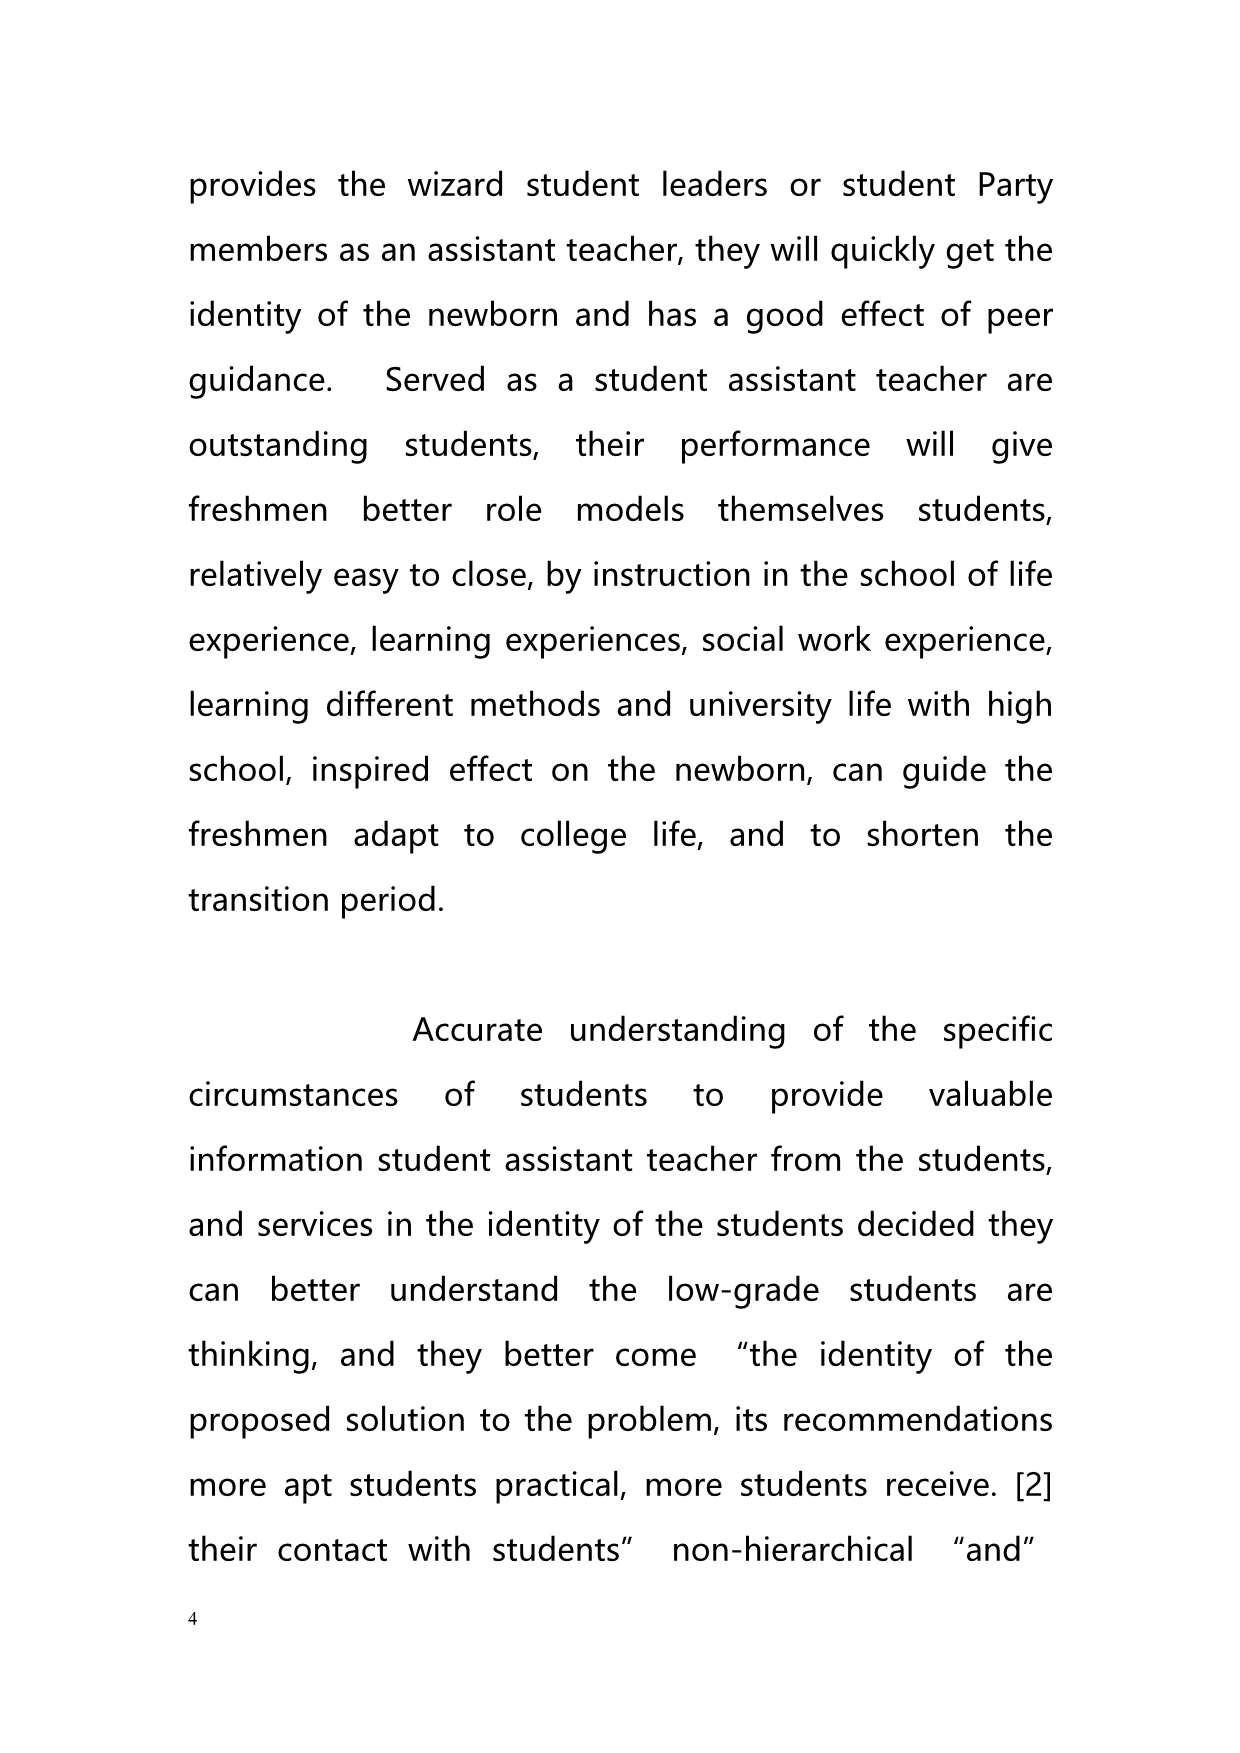 An Analysis of student assistant teacher team building analysis and Thinking（分析学生助理教师团队建设的分析和思考）_第4页